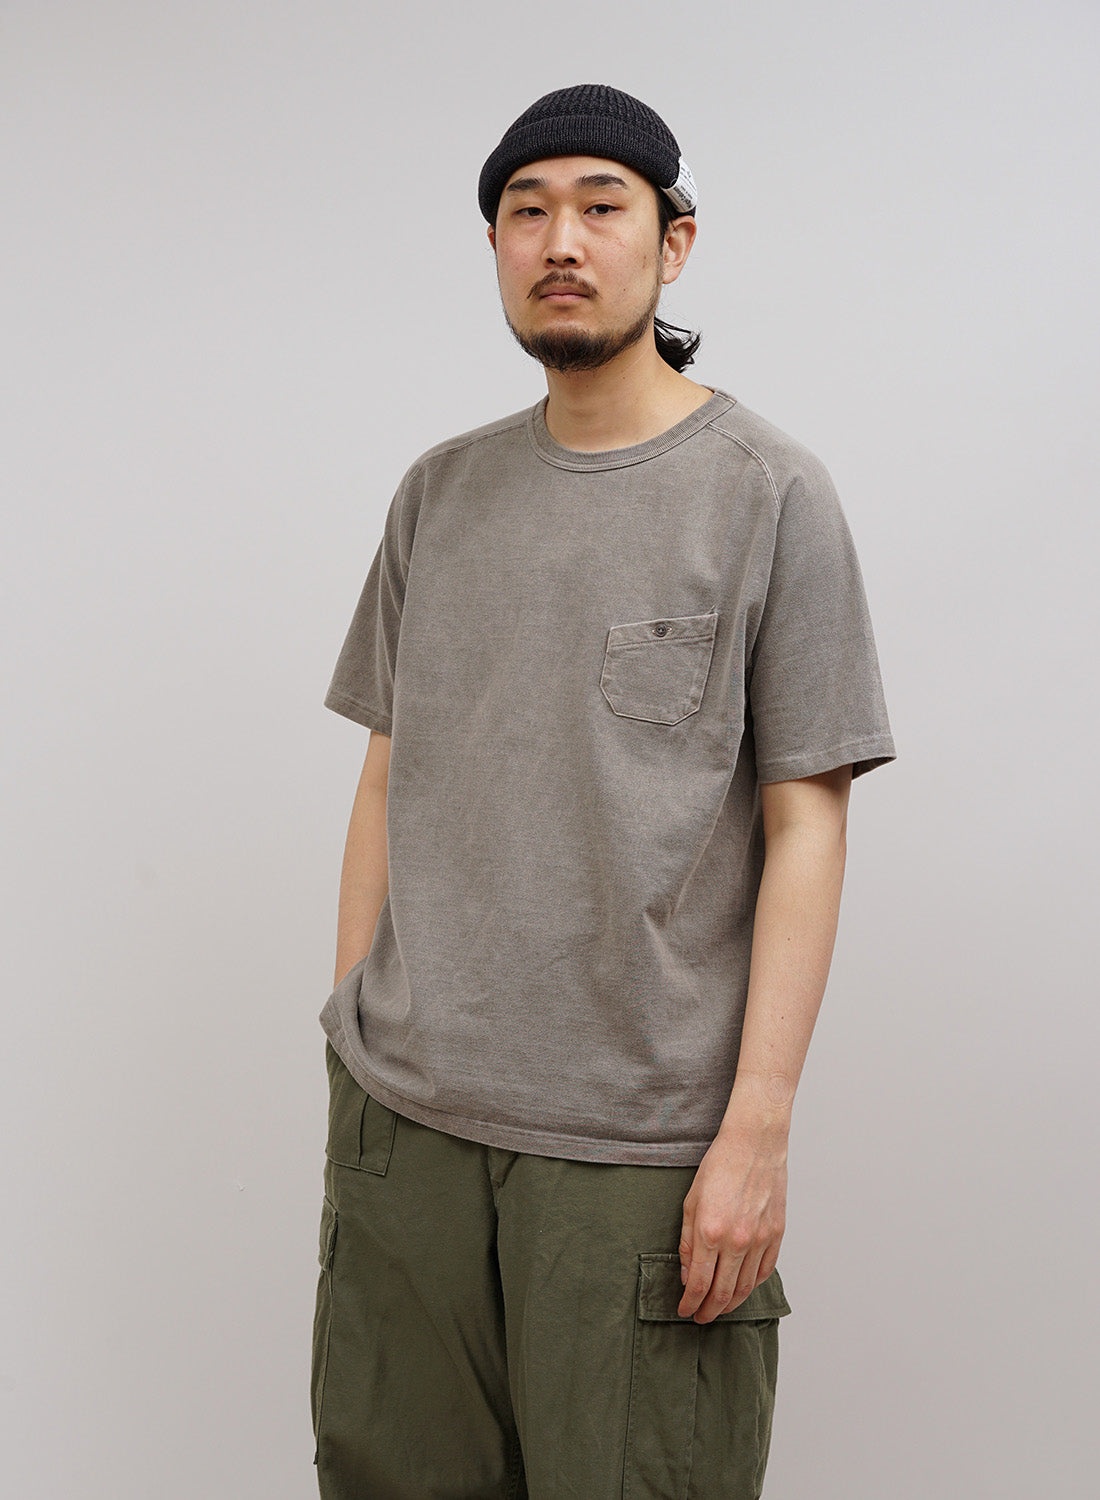 9.5oz Basic T-Shirt Pigment in Light Grey - 2